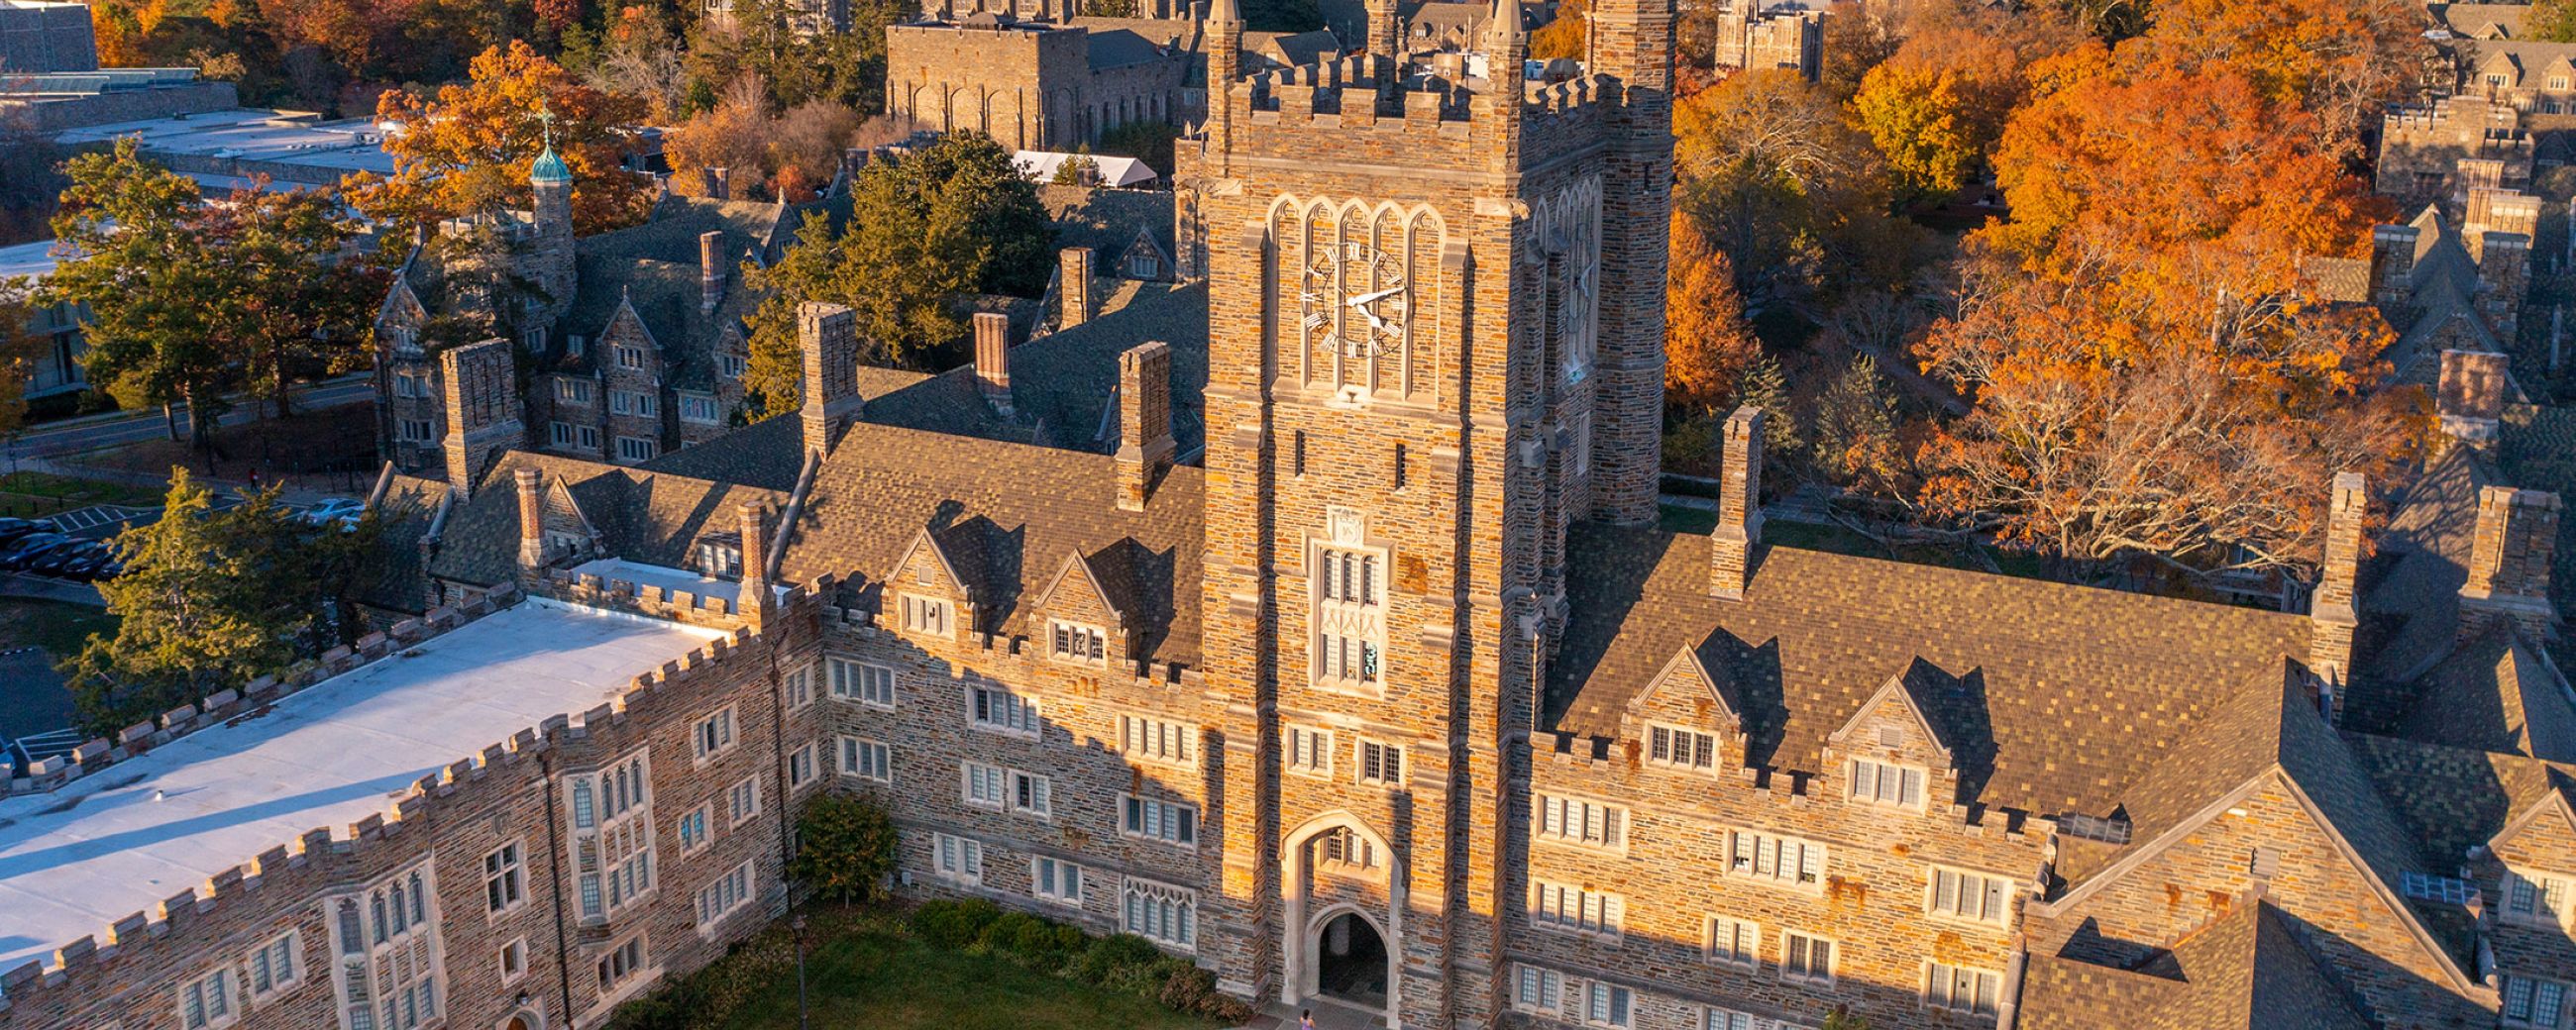 Duke University Campus